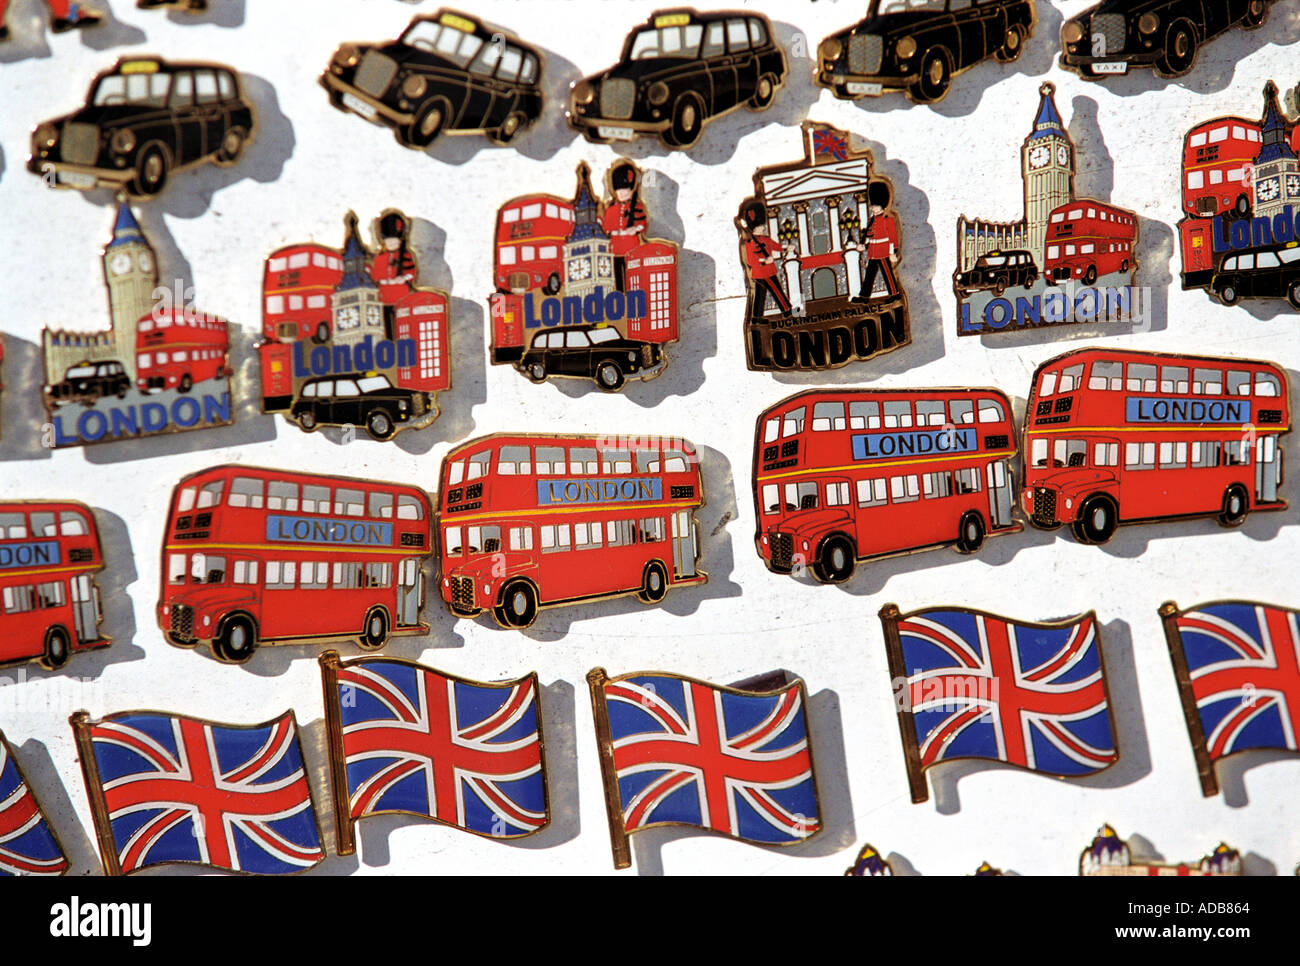 Tourist souvenirs showing London landmarks Stock Photo